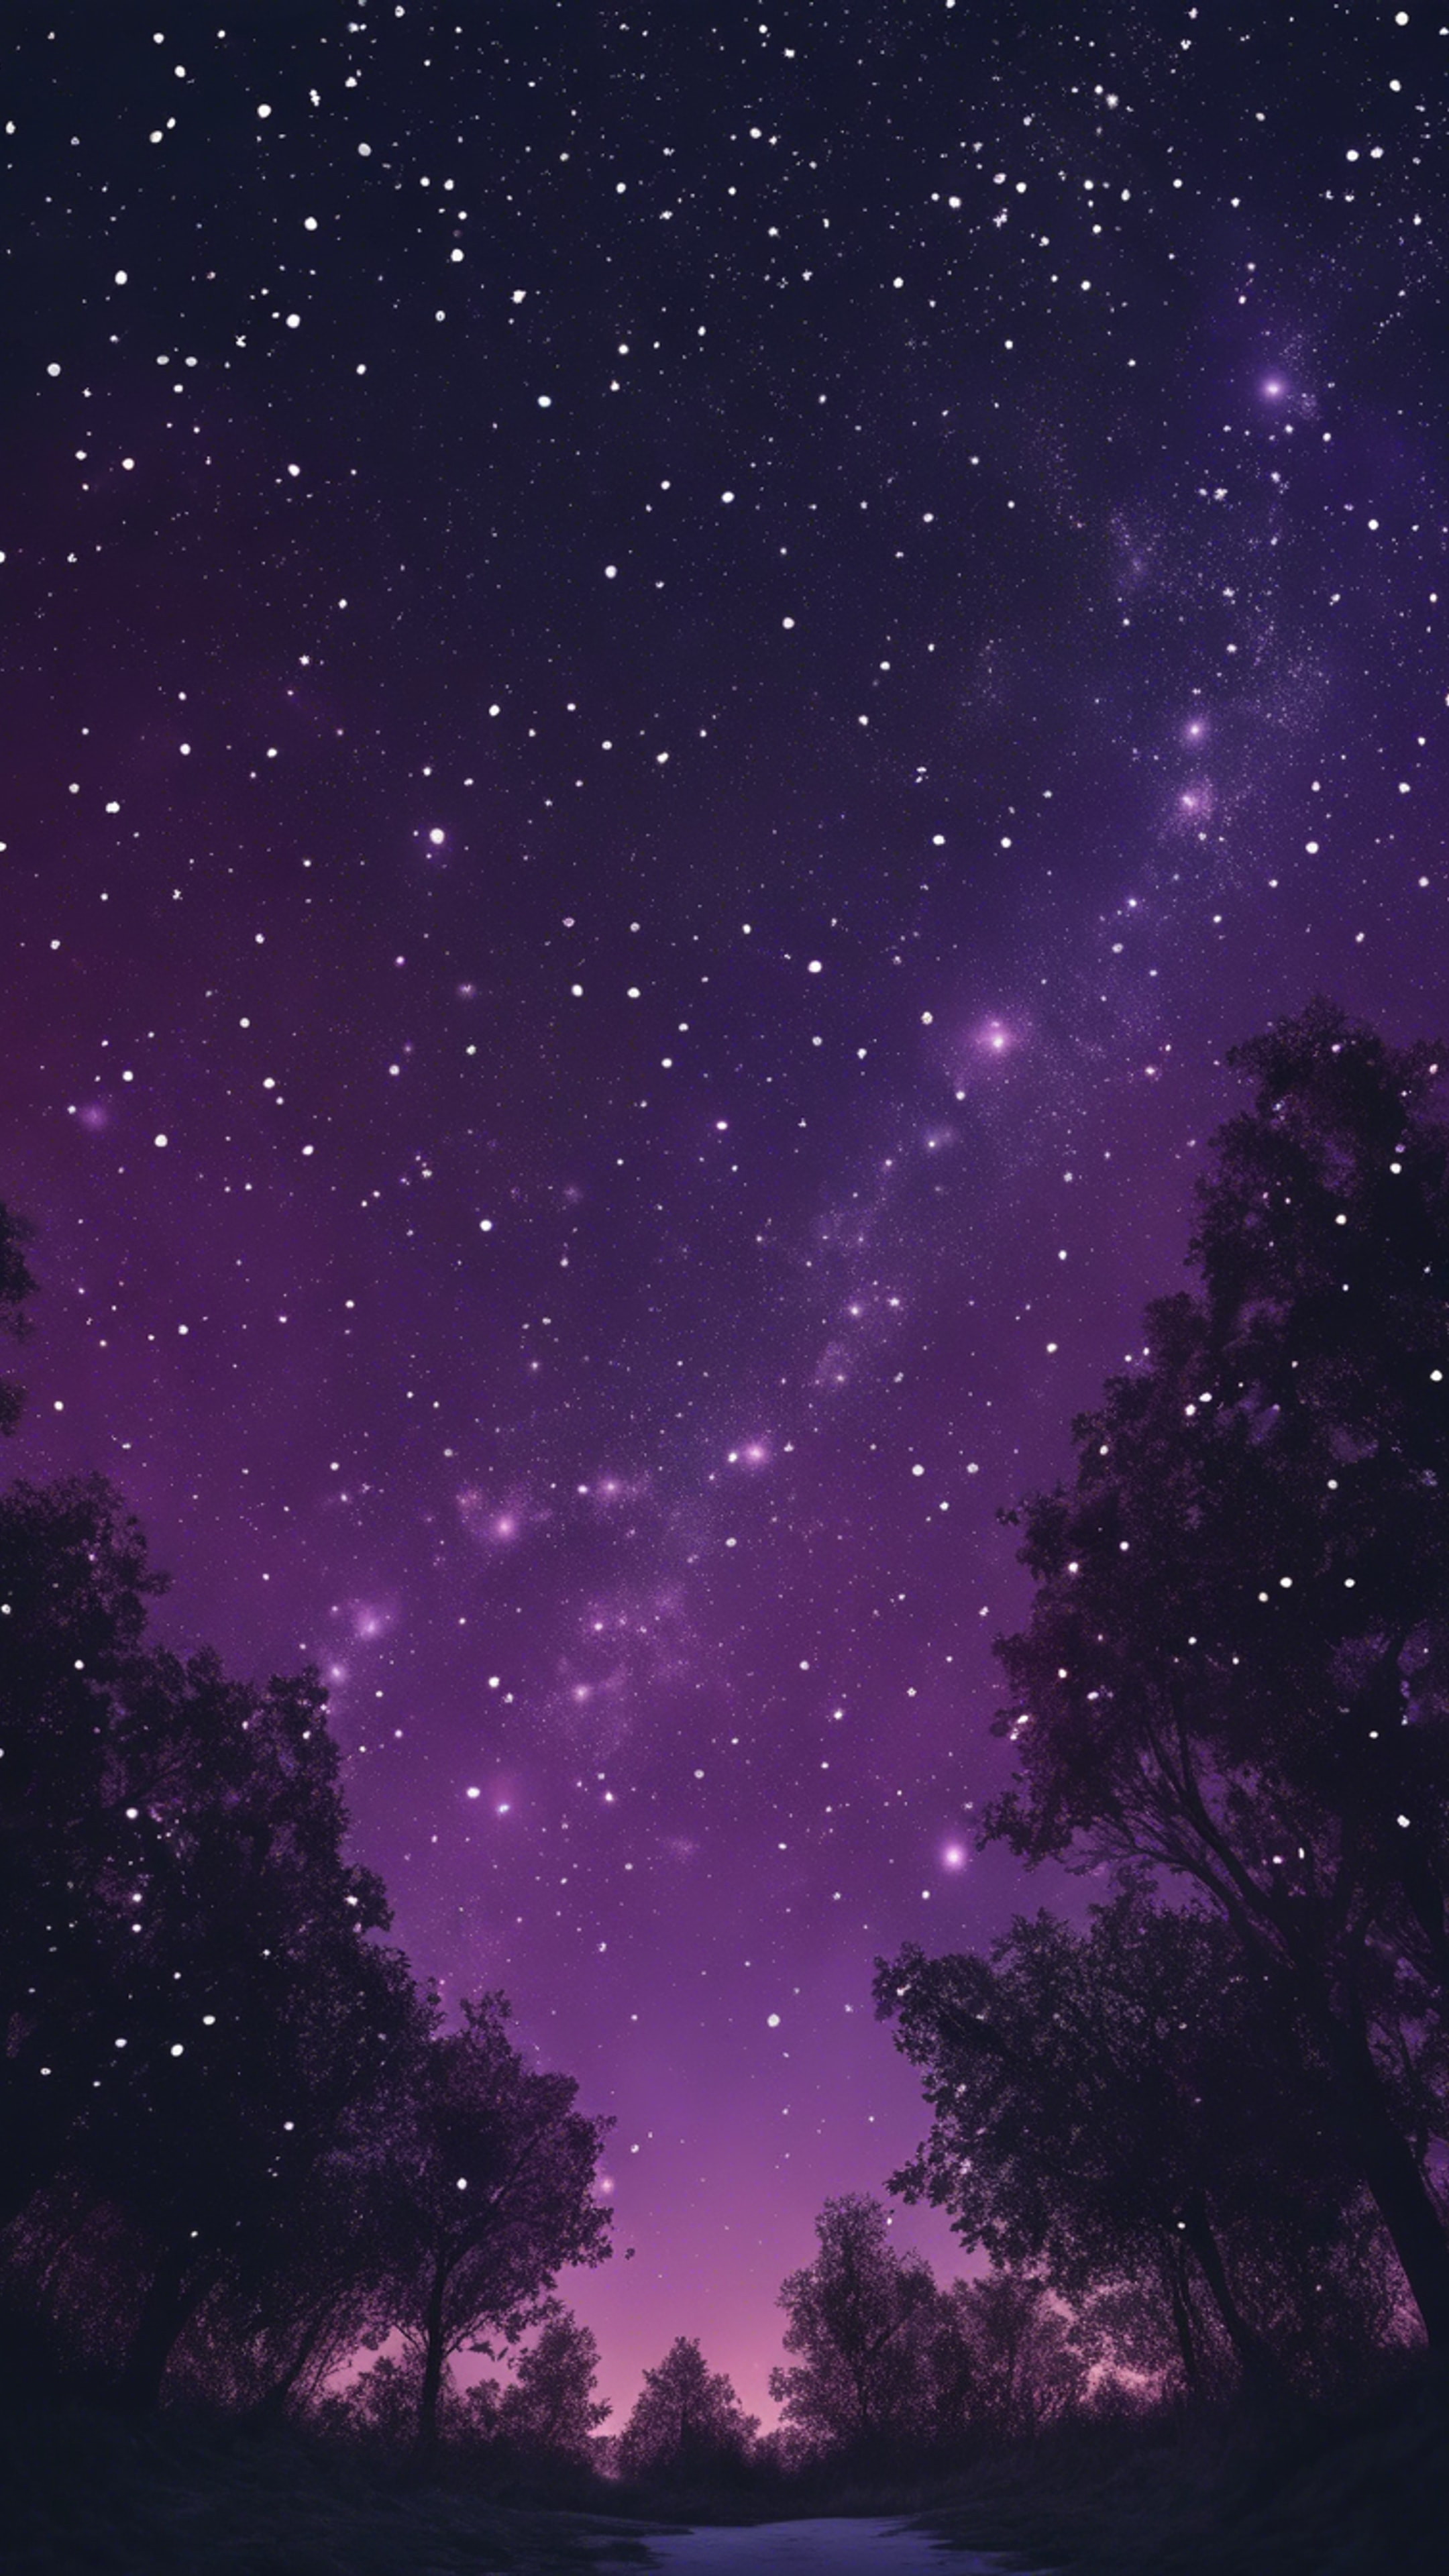 A dark purple night sky filled with glistening stars. Tapetai[87bc6c810d2c46c9bff9]